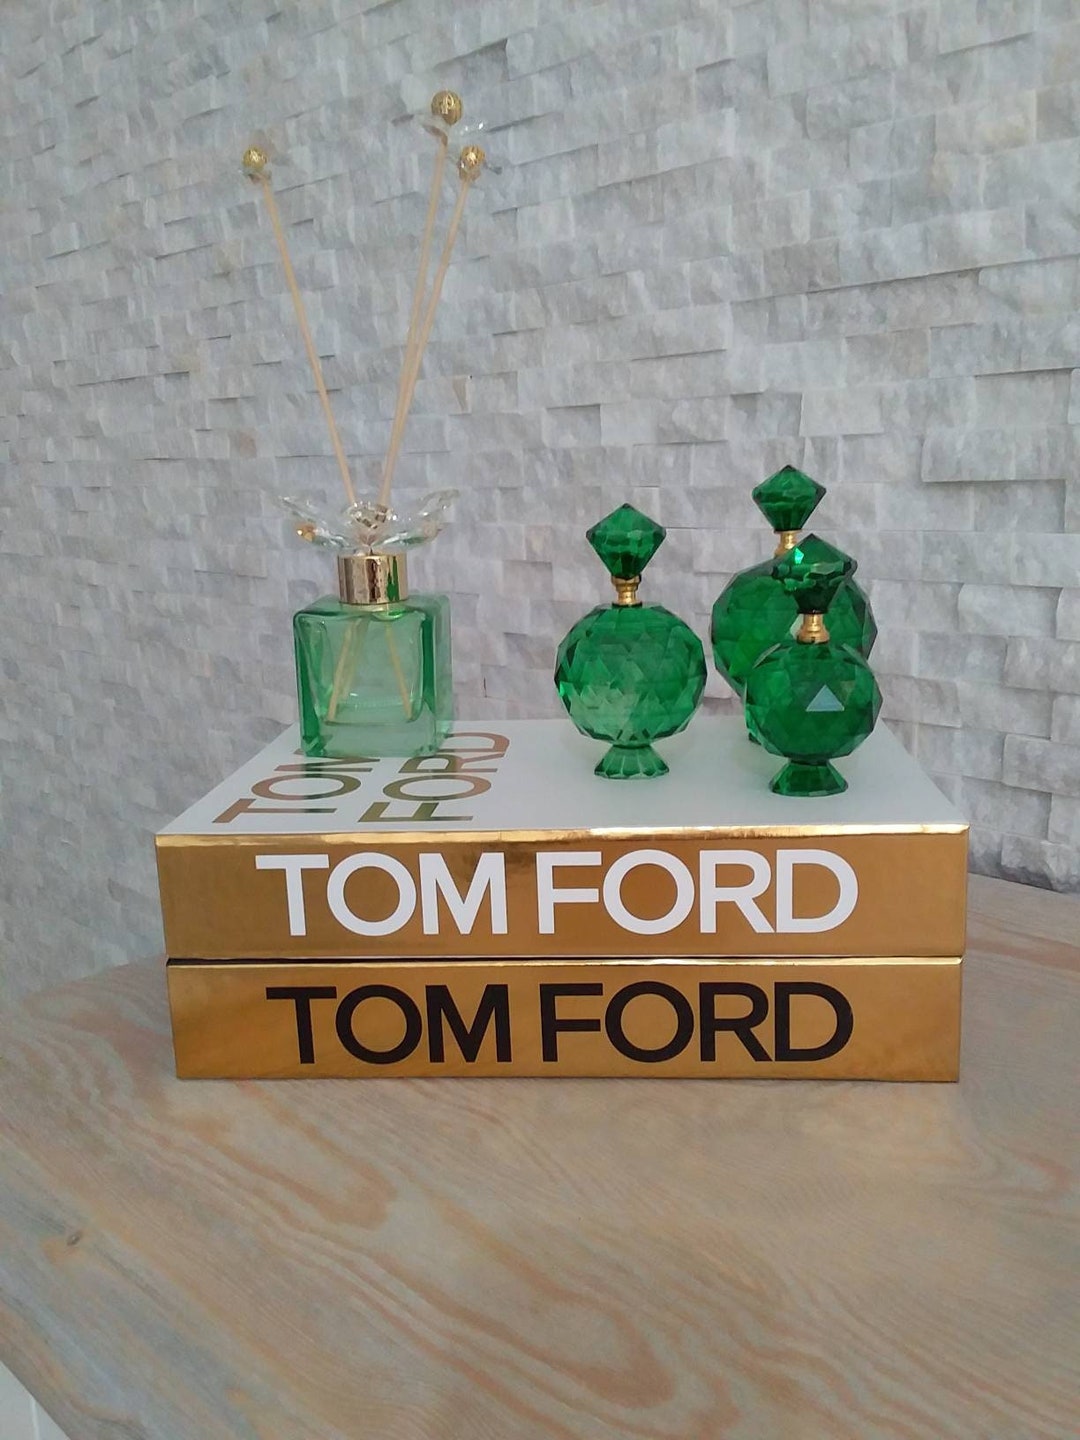 🤍BLACK TOM FORD BOOK🤍 🤍Book Box for - Designer Homeware